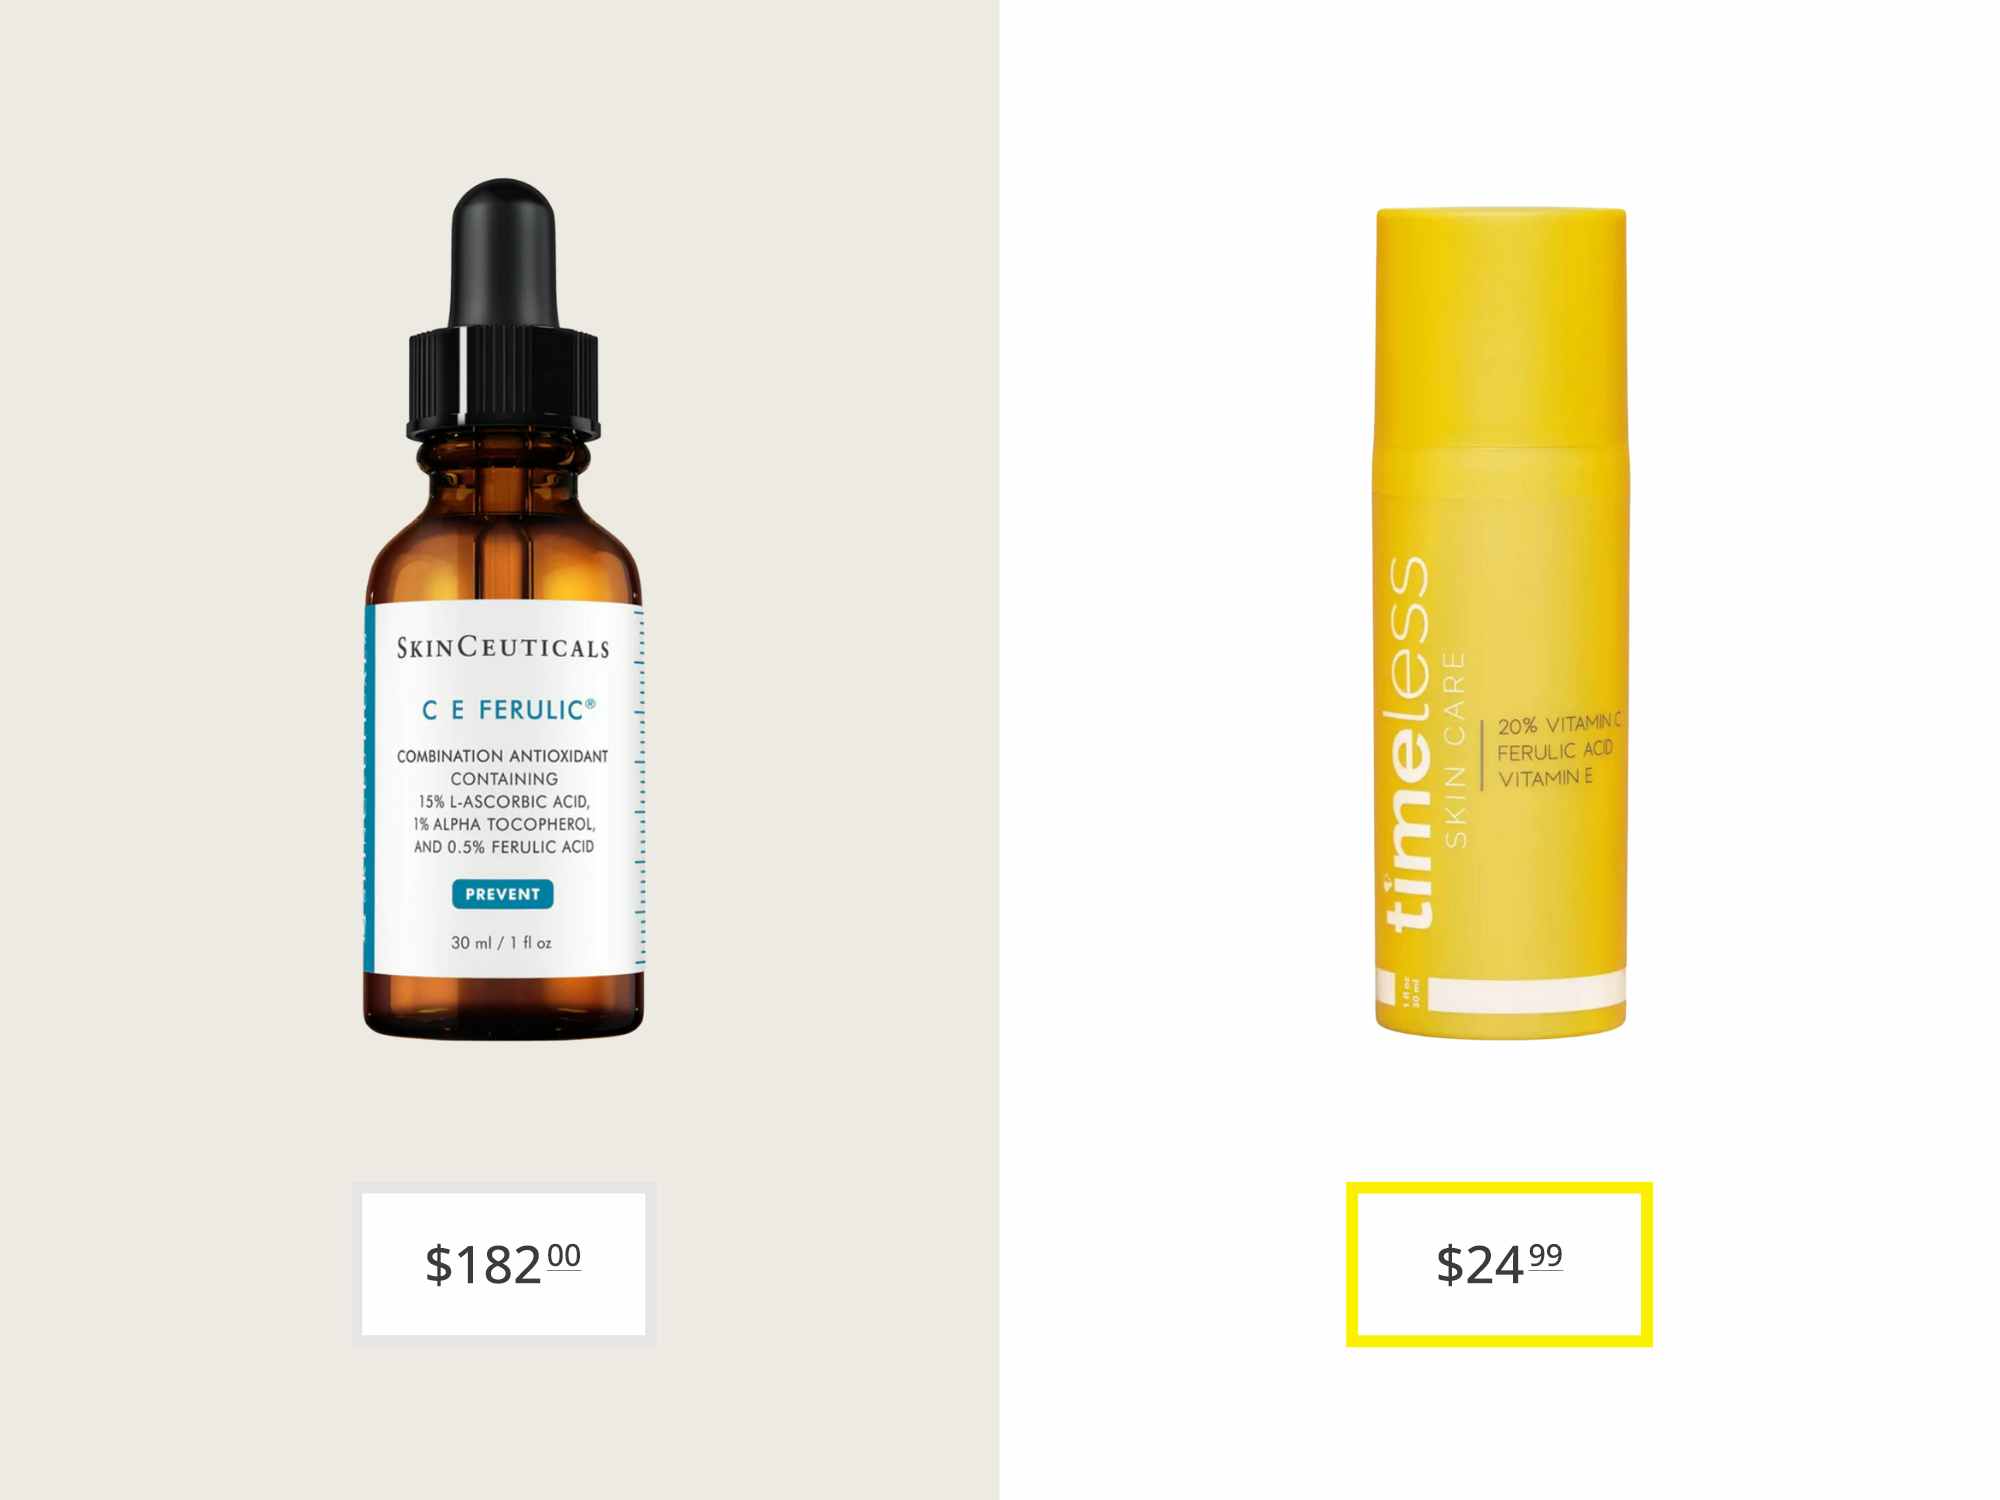 skinceuticals c e ferulic serum and timeless skin care vitamin c and e ferulic acid serum price comparison graphic